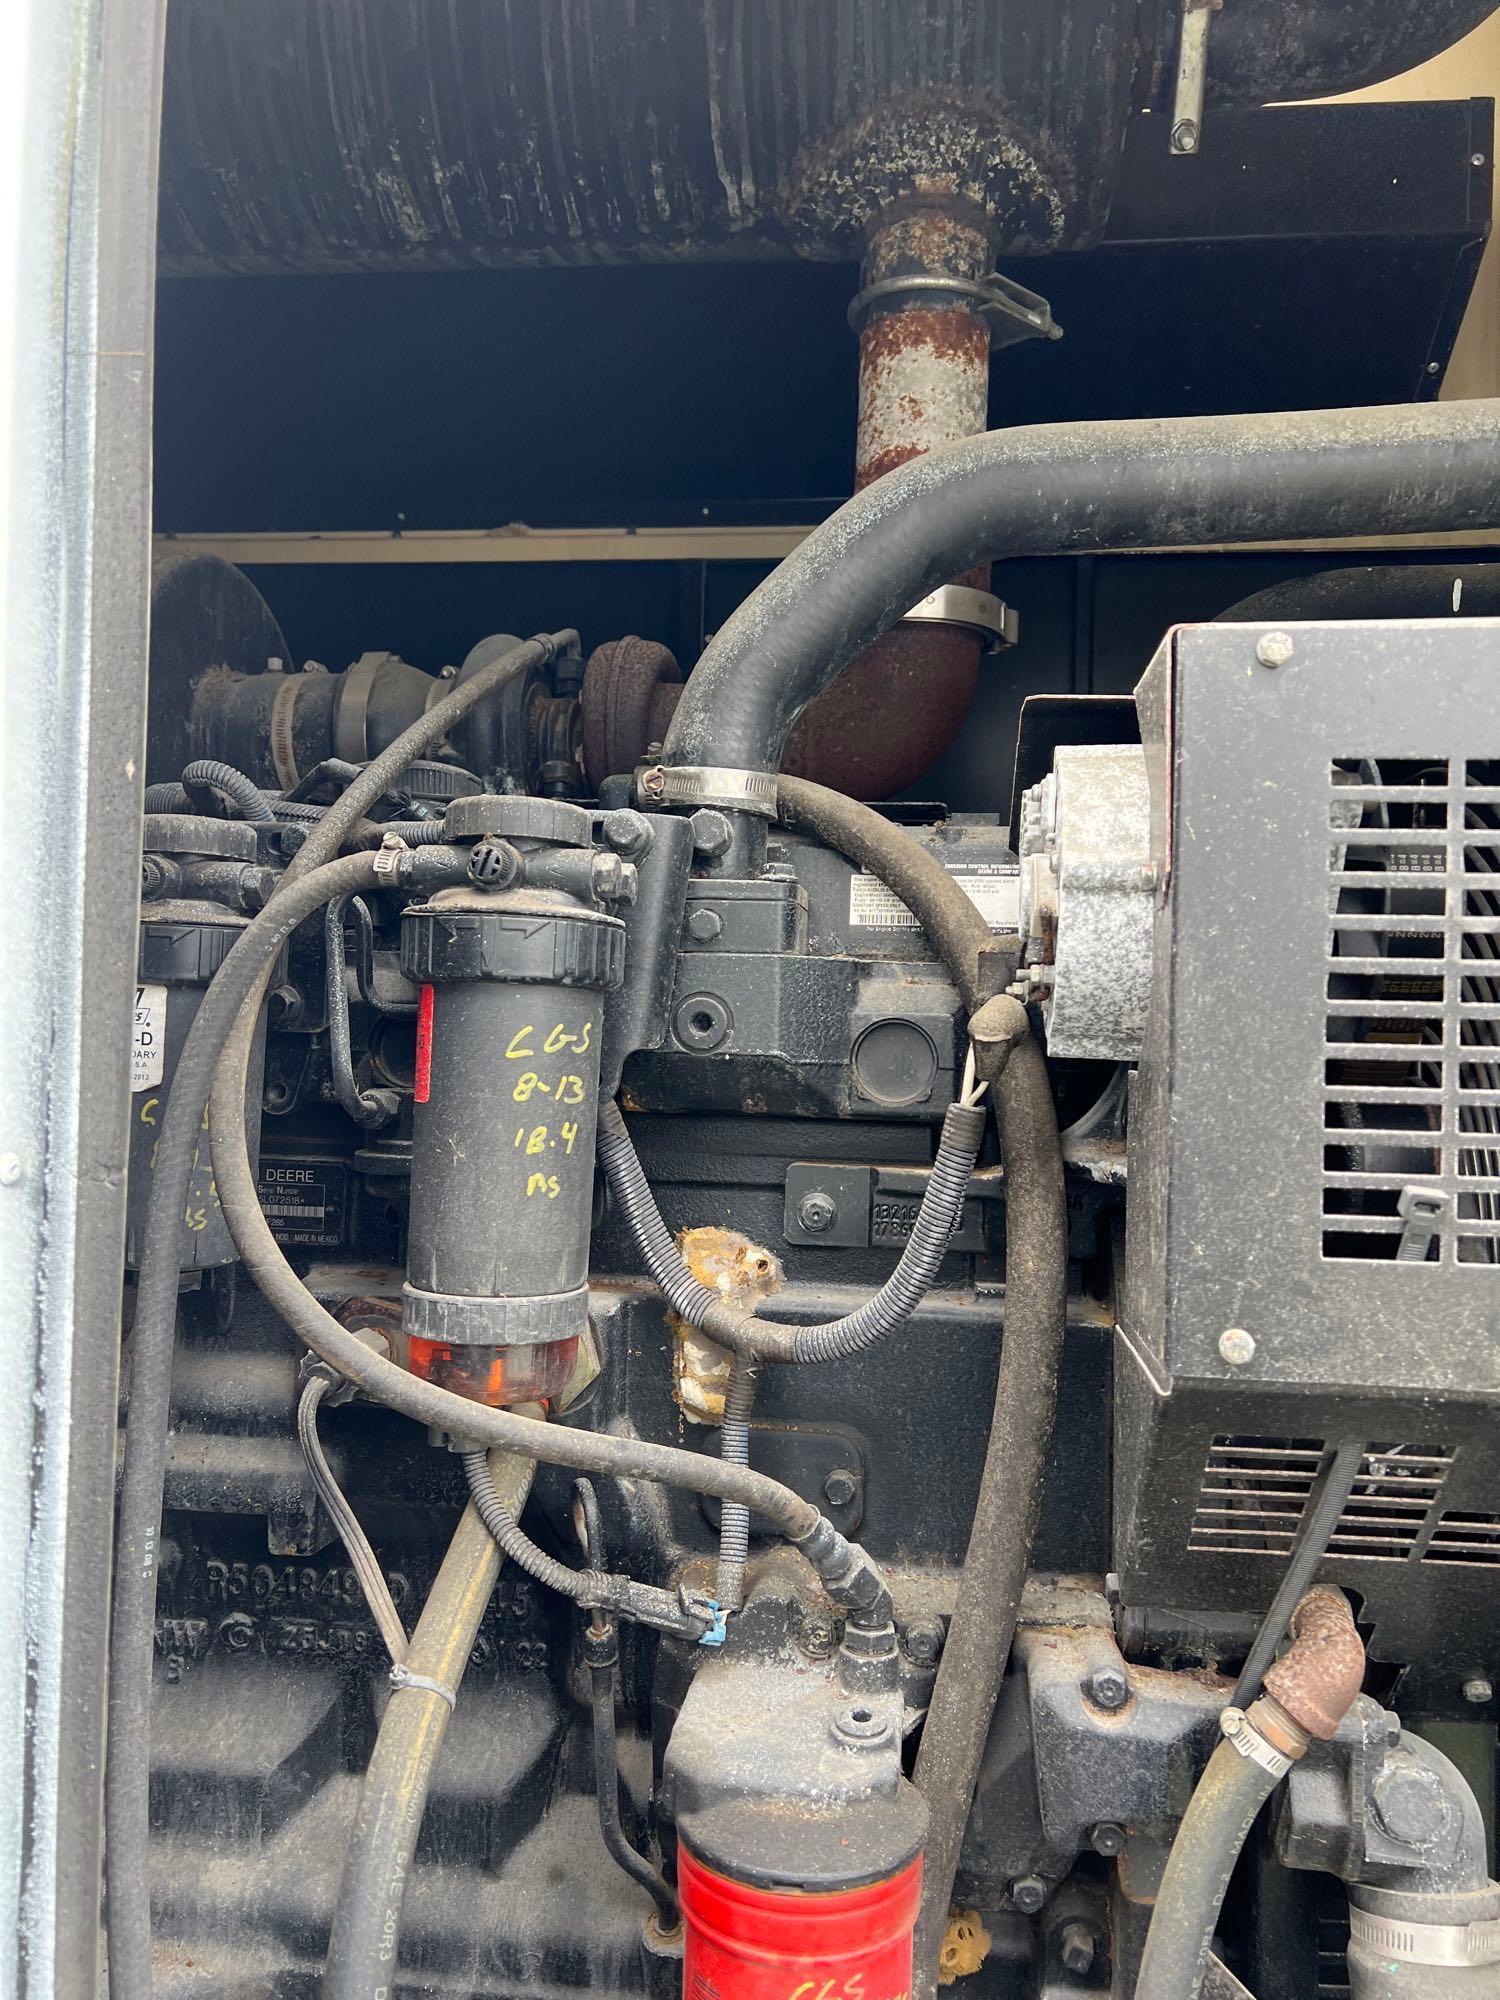 Kohler 100REOZJD generator with fuel tank